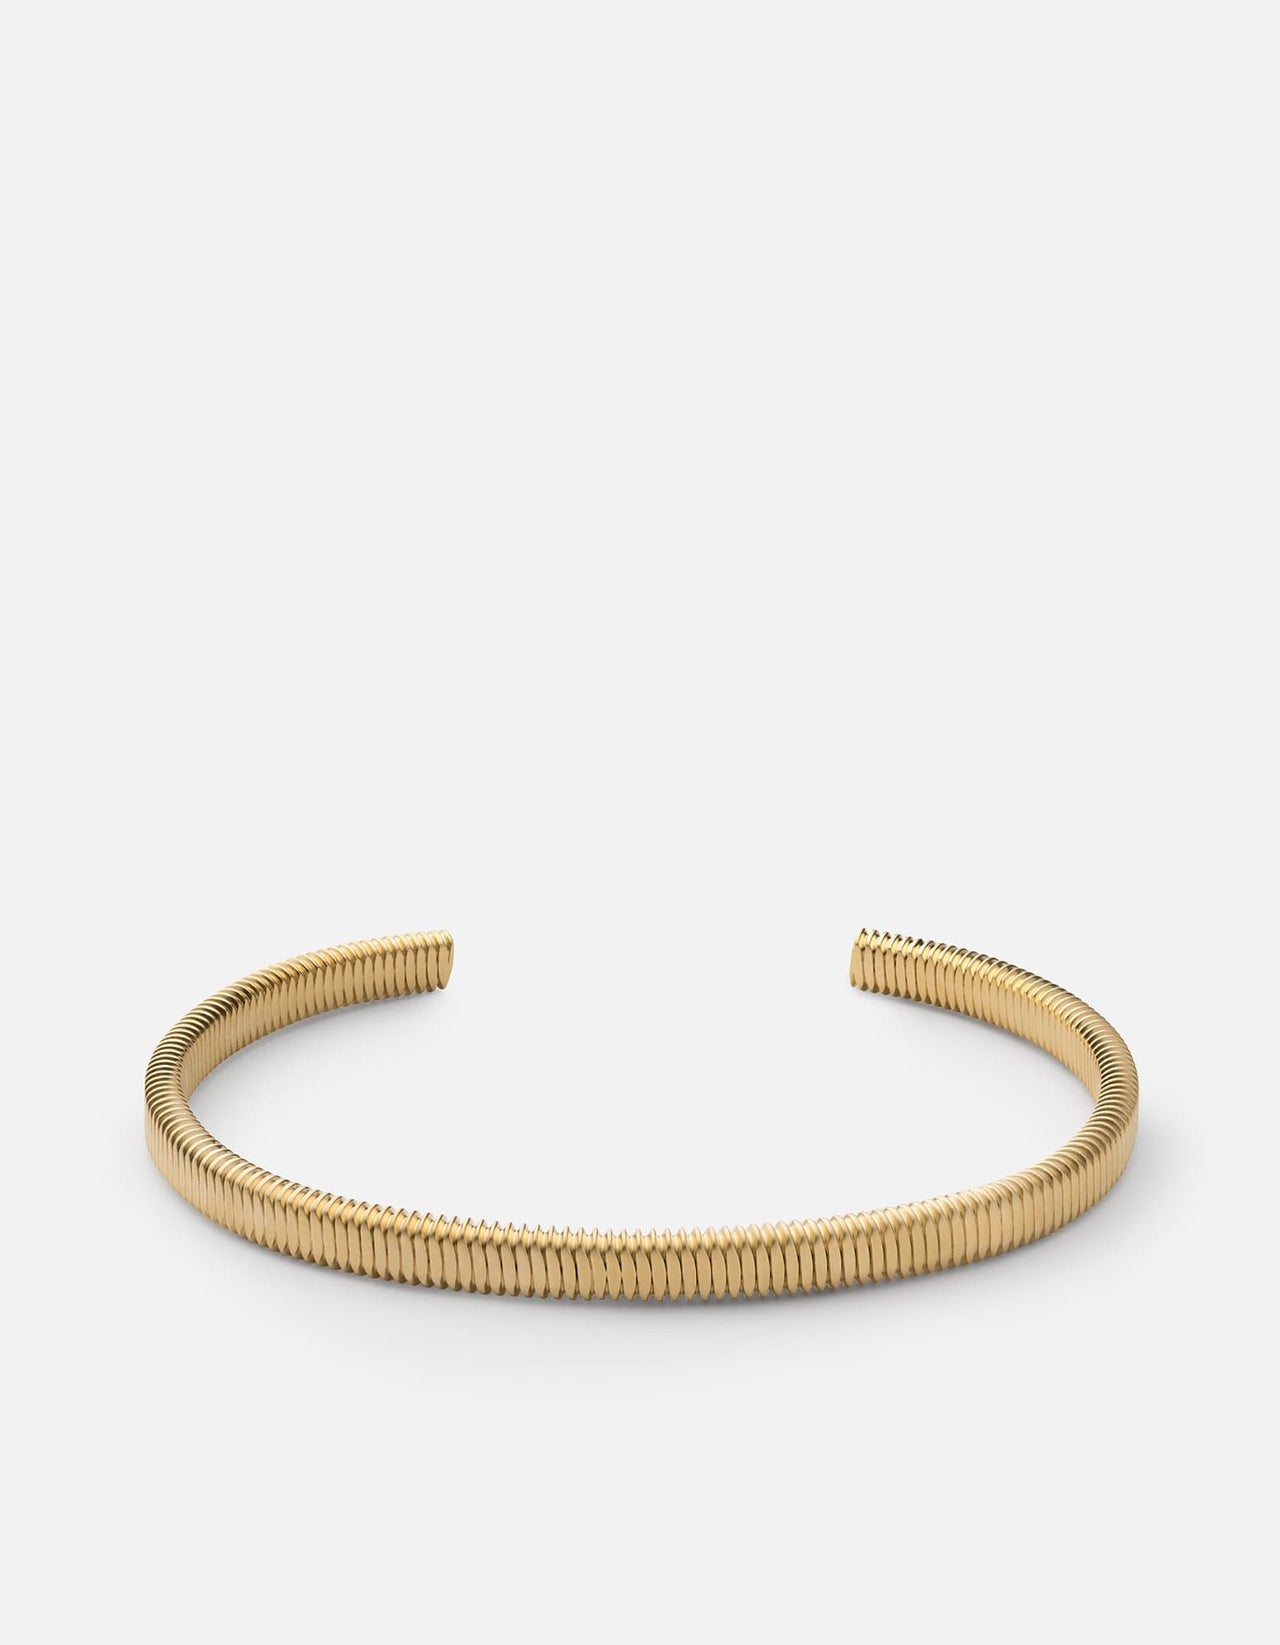 Thread Cuff, Gold Plated | Men's Cuffs | Miansai